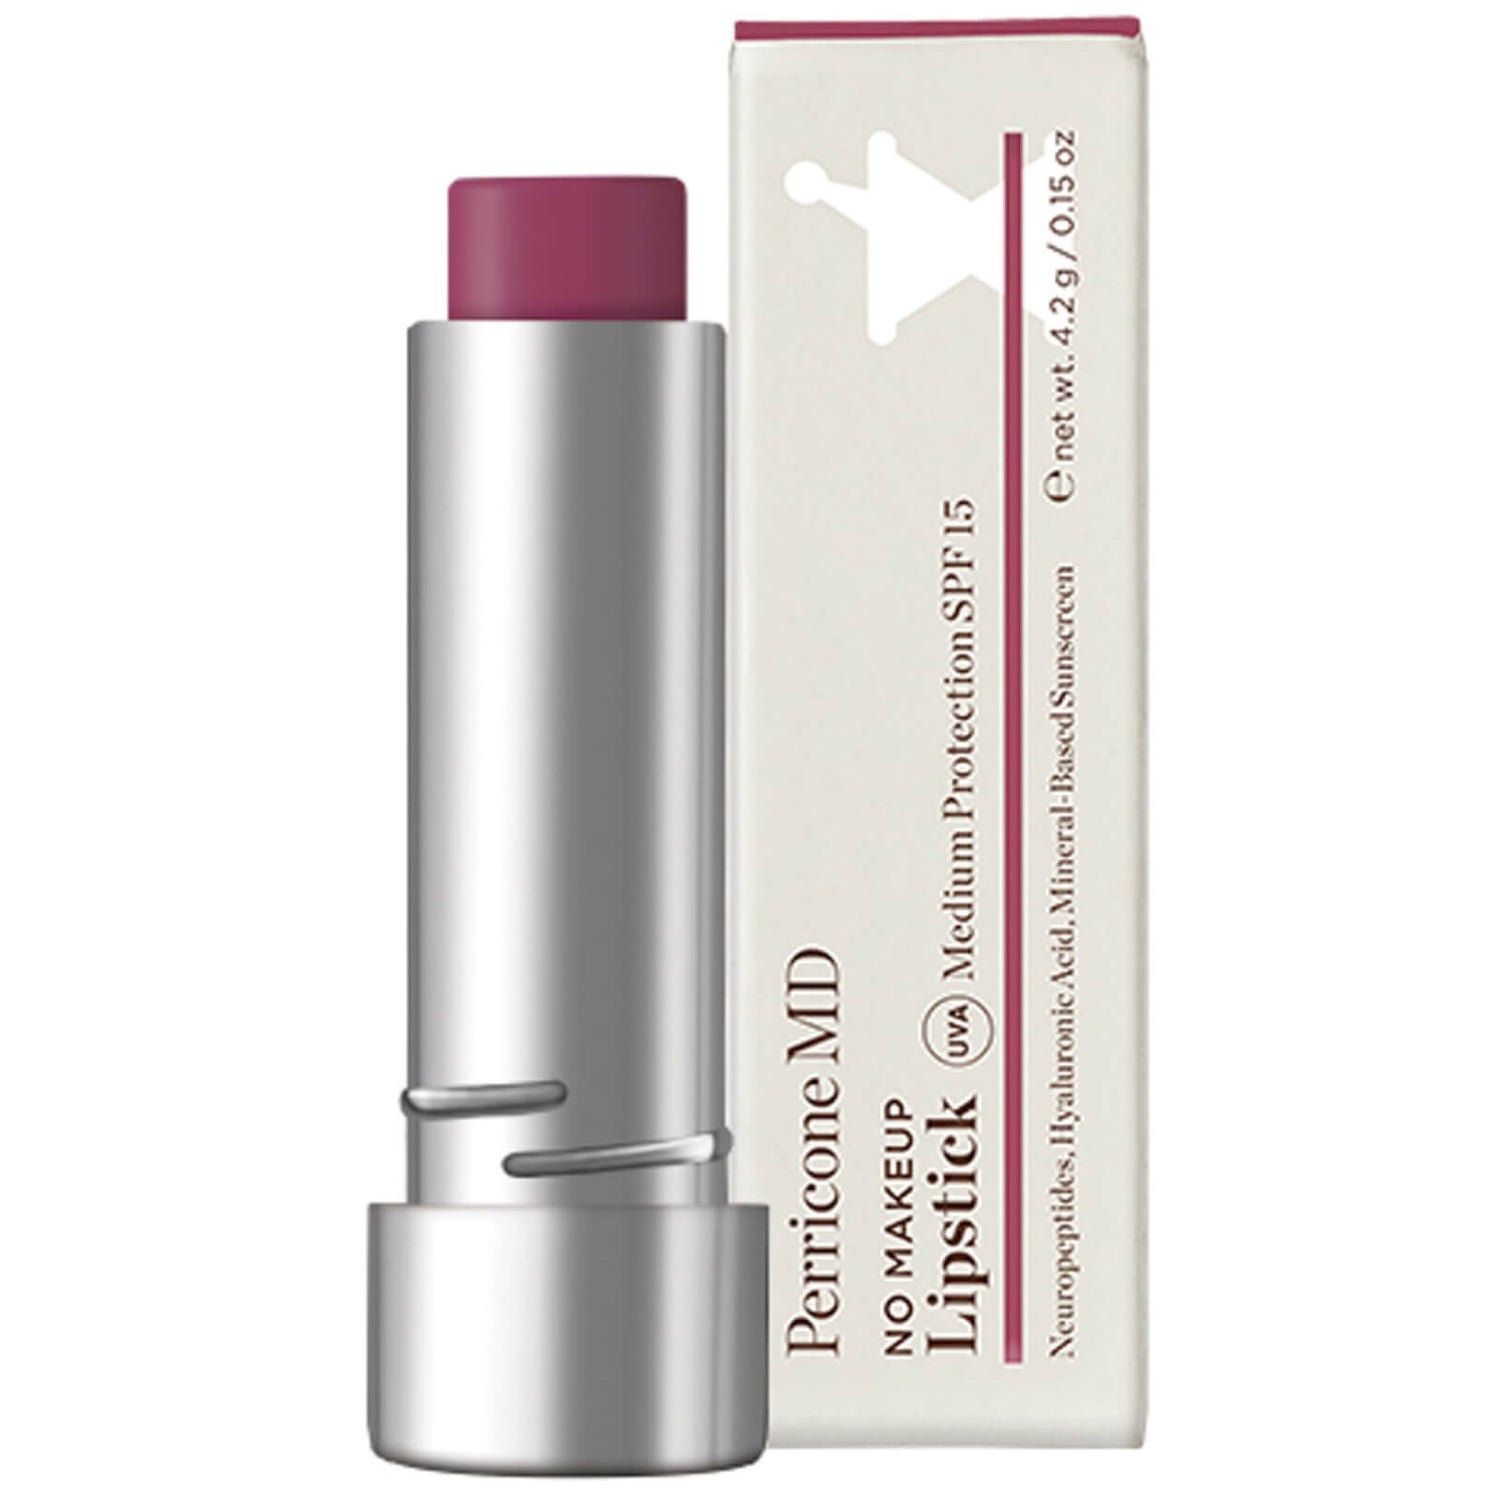 Perricone MD No Makeup Lipstick SPF 15 4.2g (Various Shades)